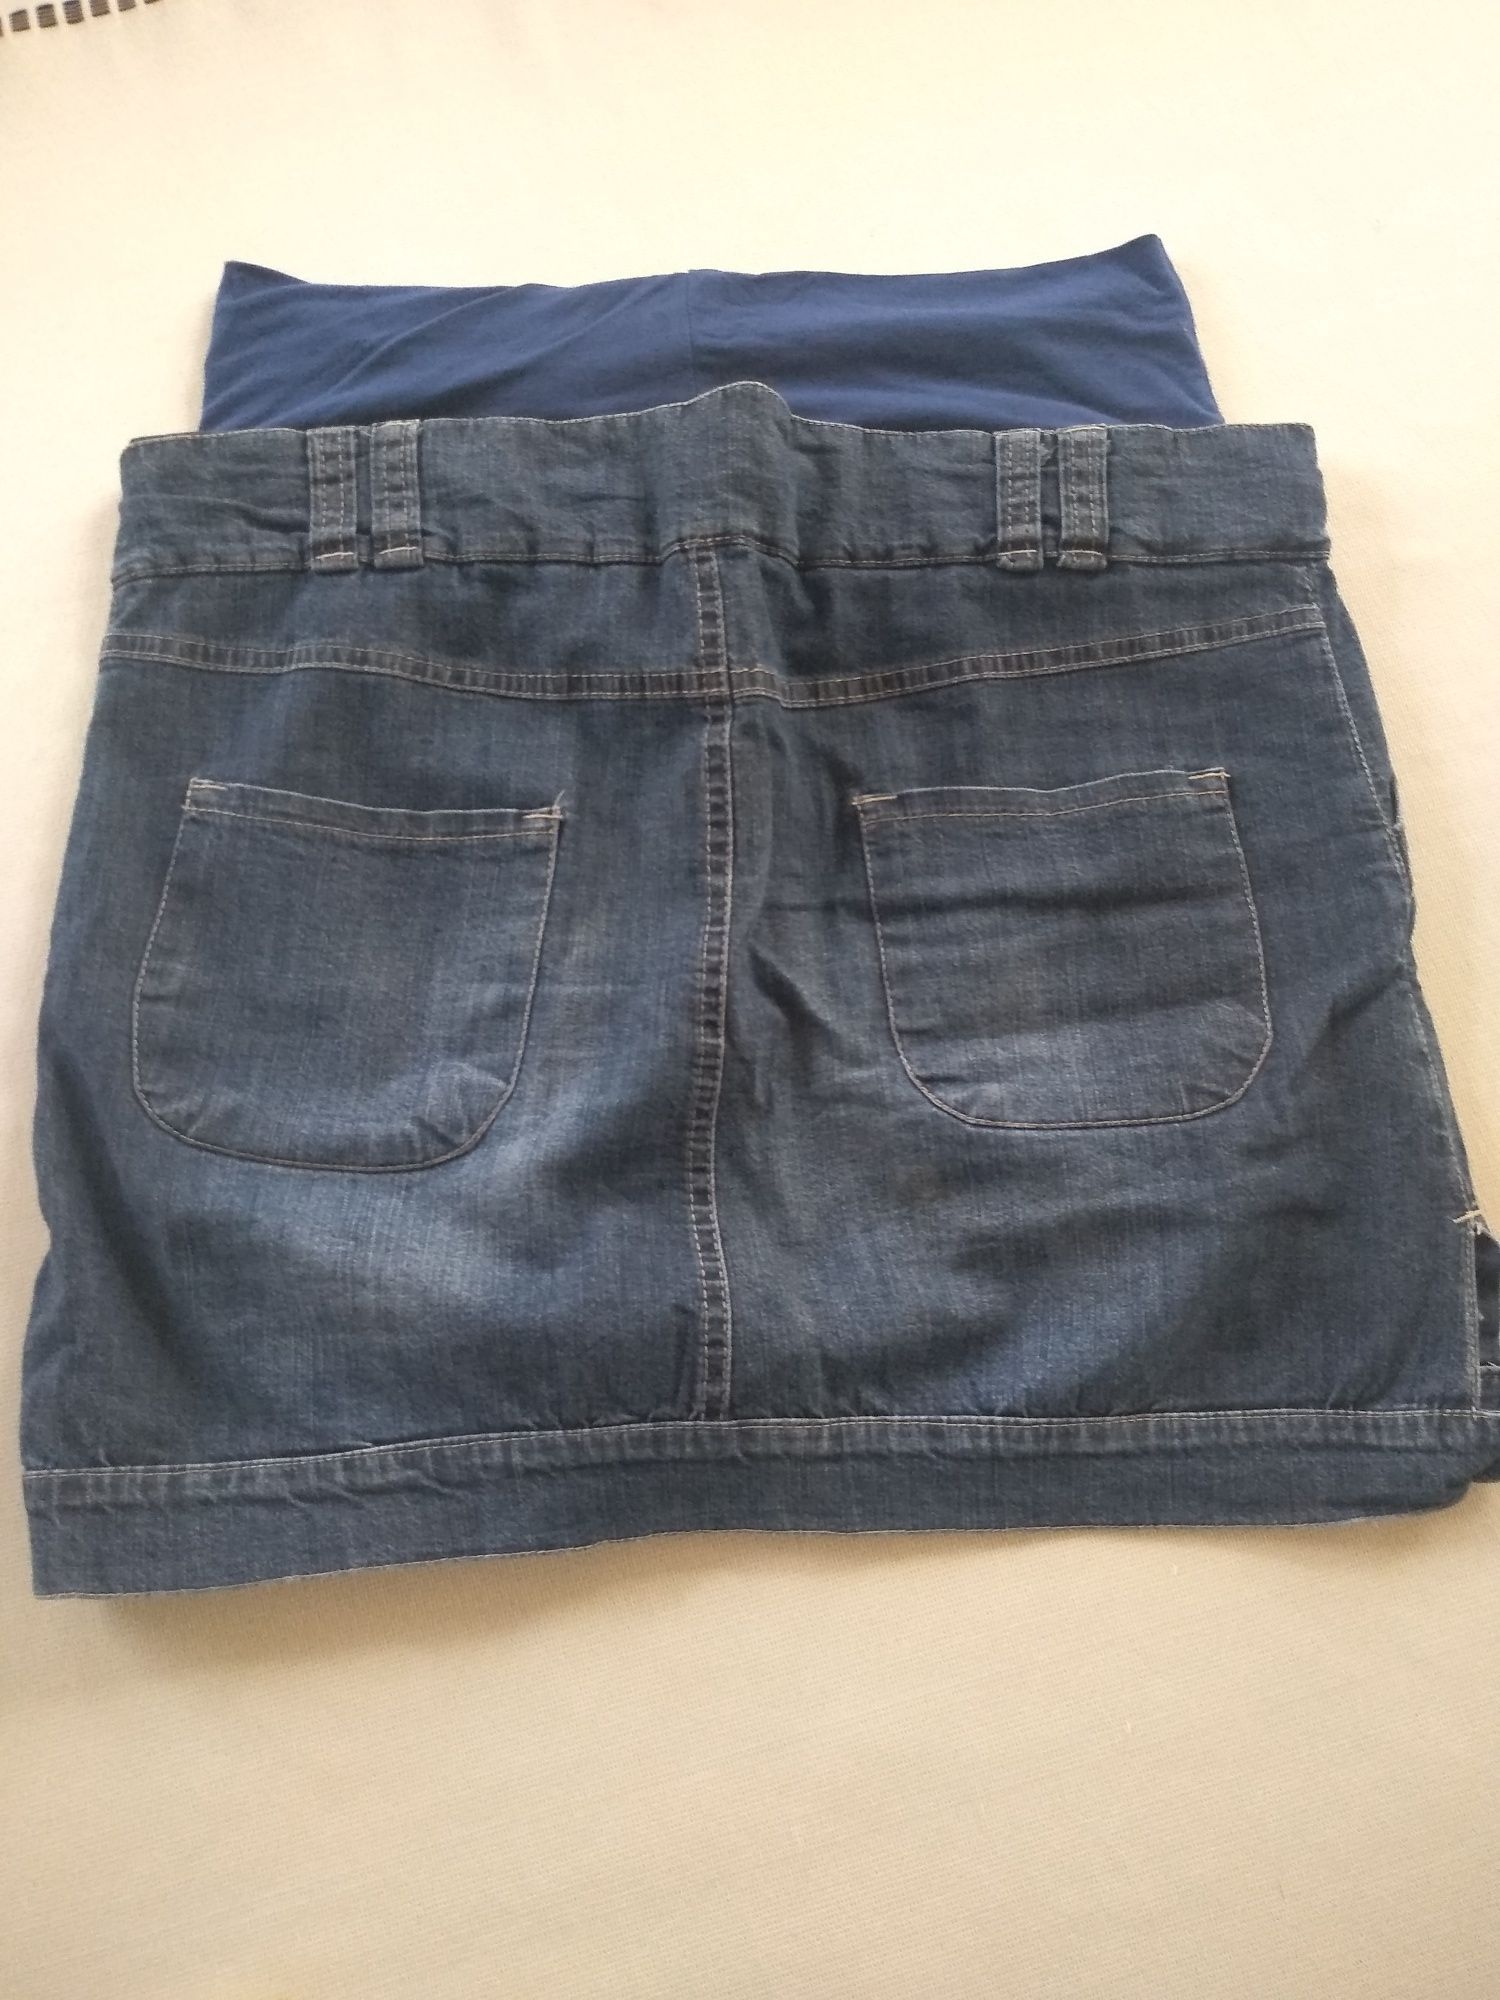 Spódnica jeansowa ciążowa r L/40 z panelem Qba